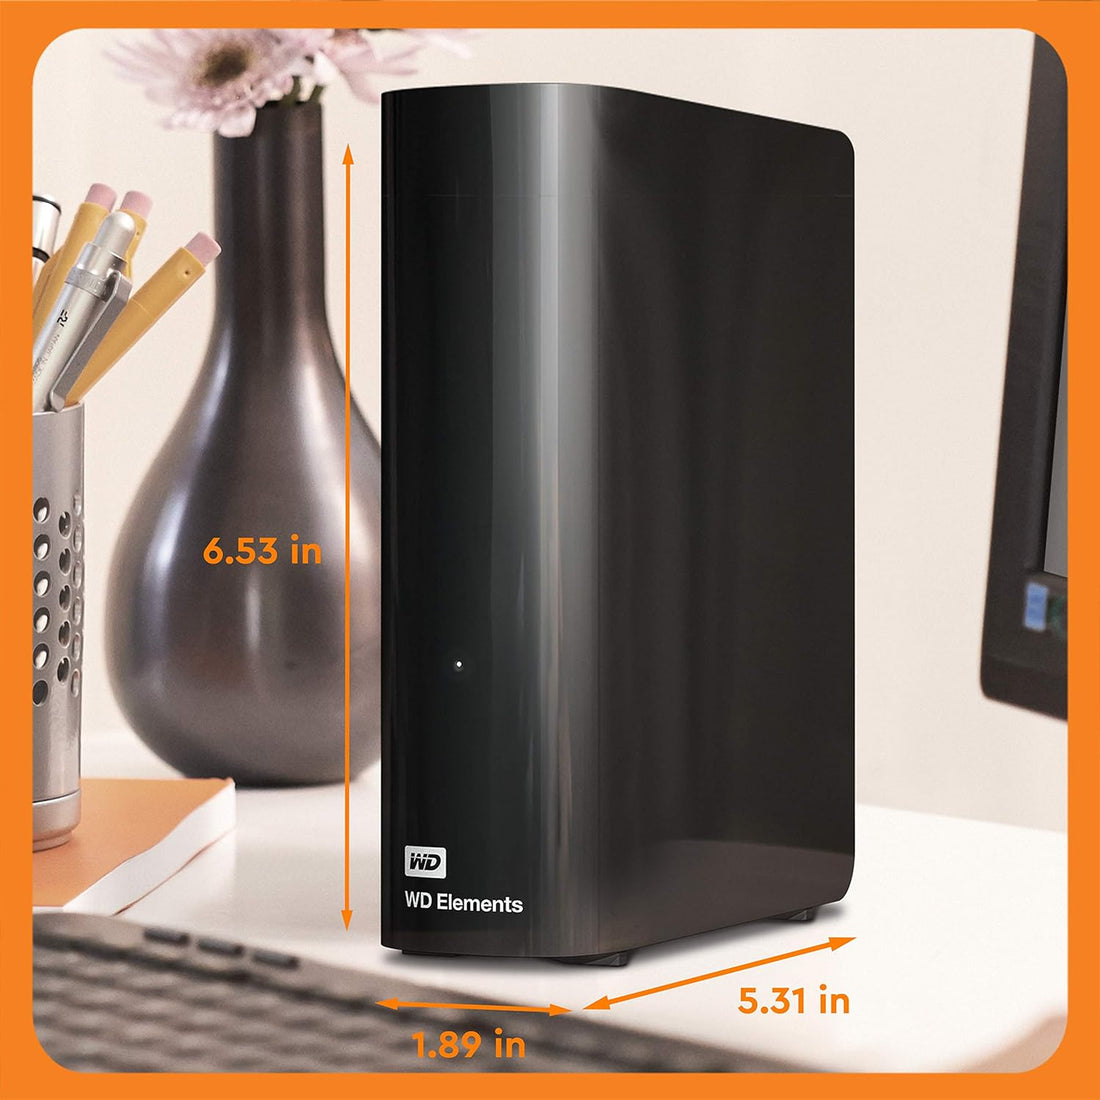 WD 6TB Elements Desktop Hard Drive - USB 3.0 - WDBWLG0060HBK-NESN